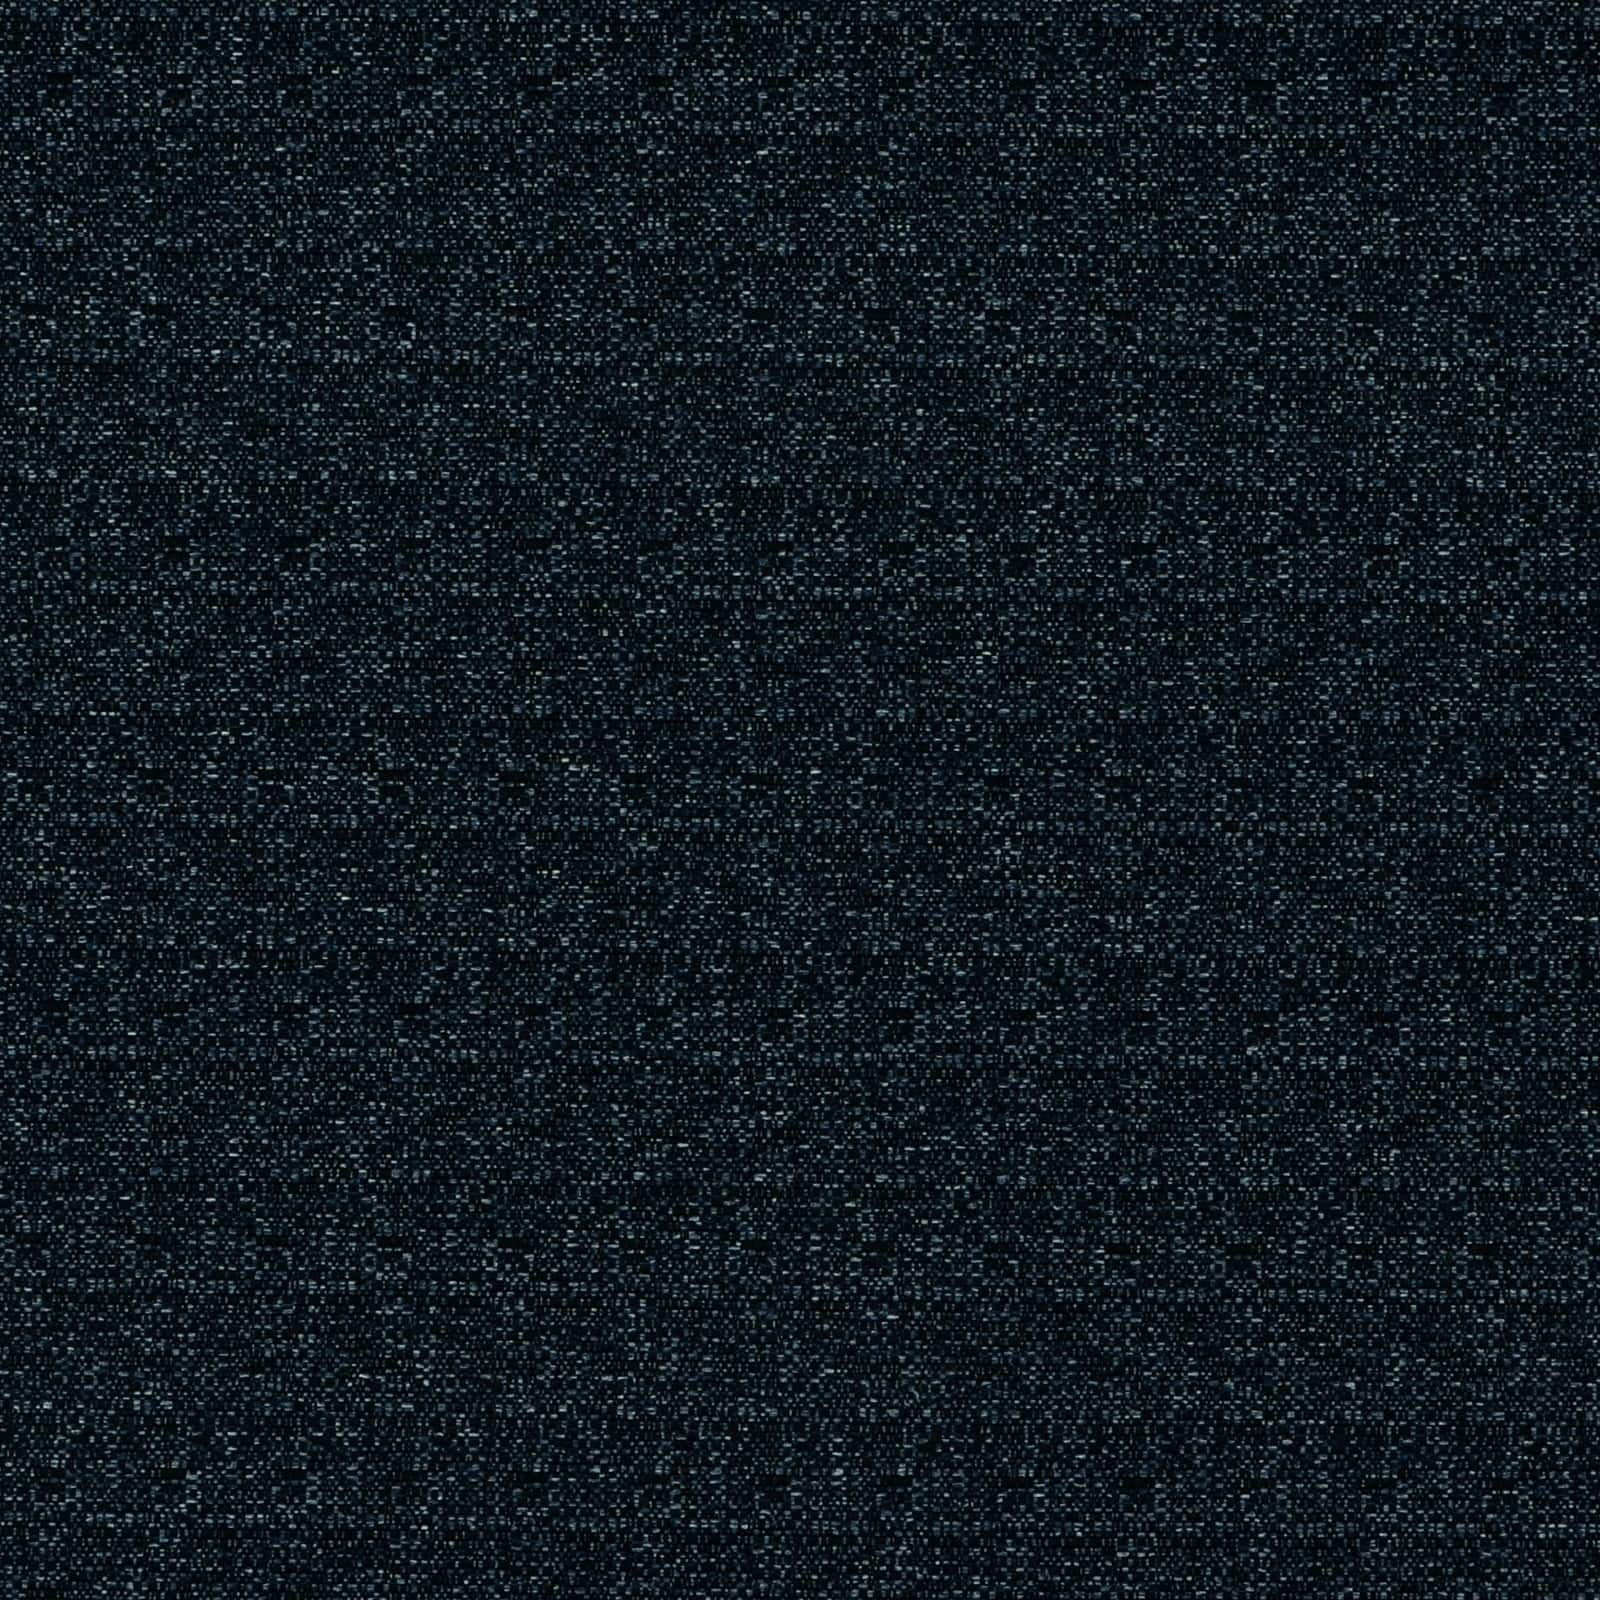 Essential Living Strand Black Upholstery Fabric 